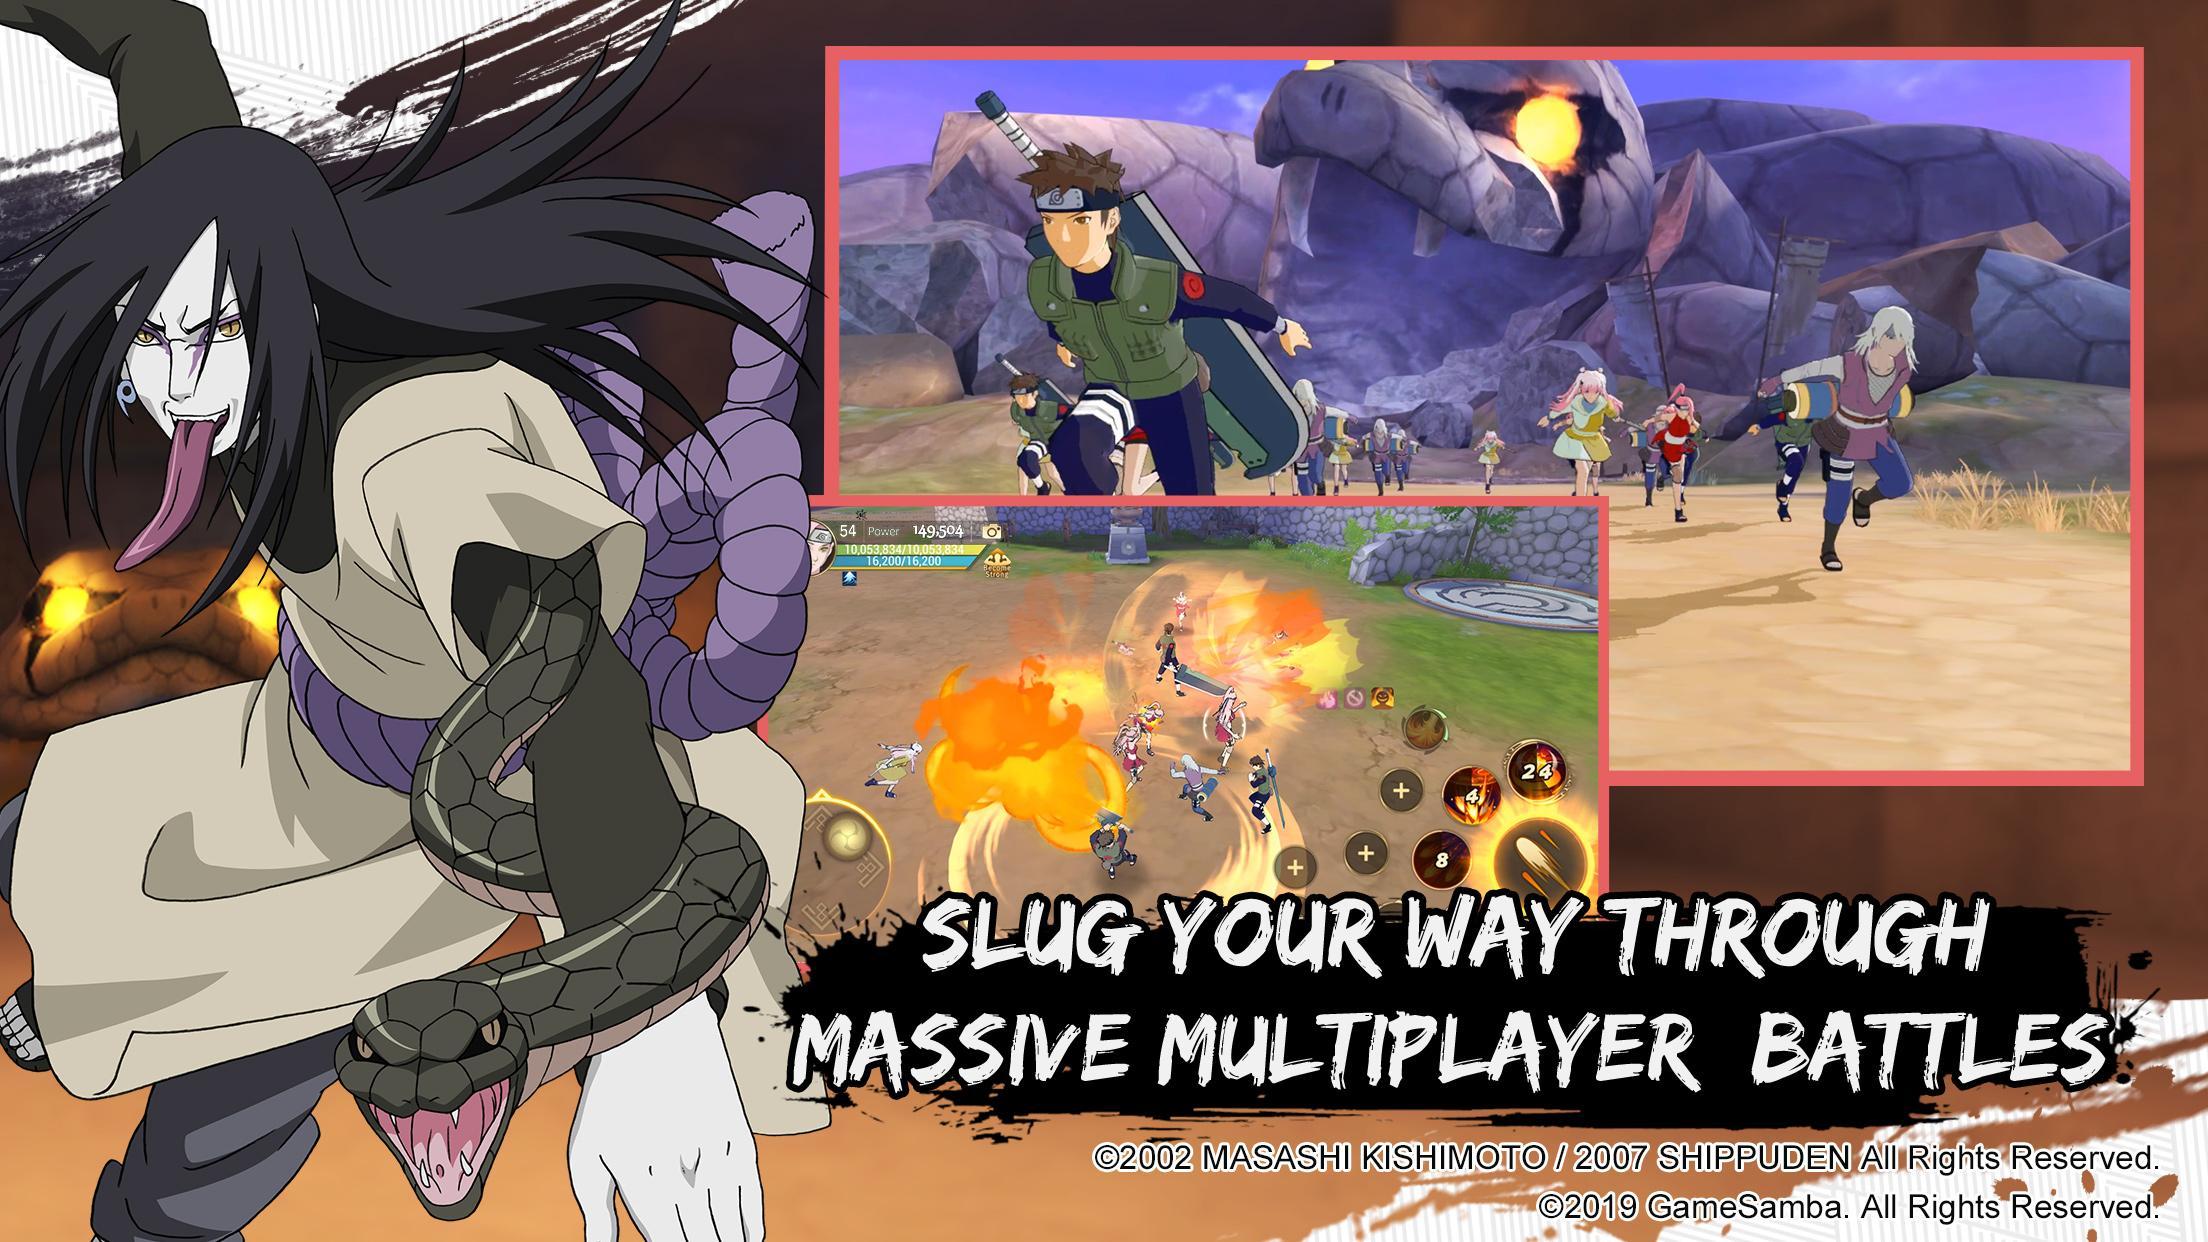 Naruto: Slugfest for Android - APK Download